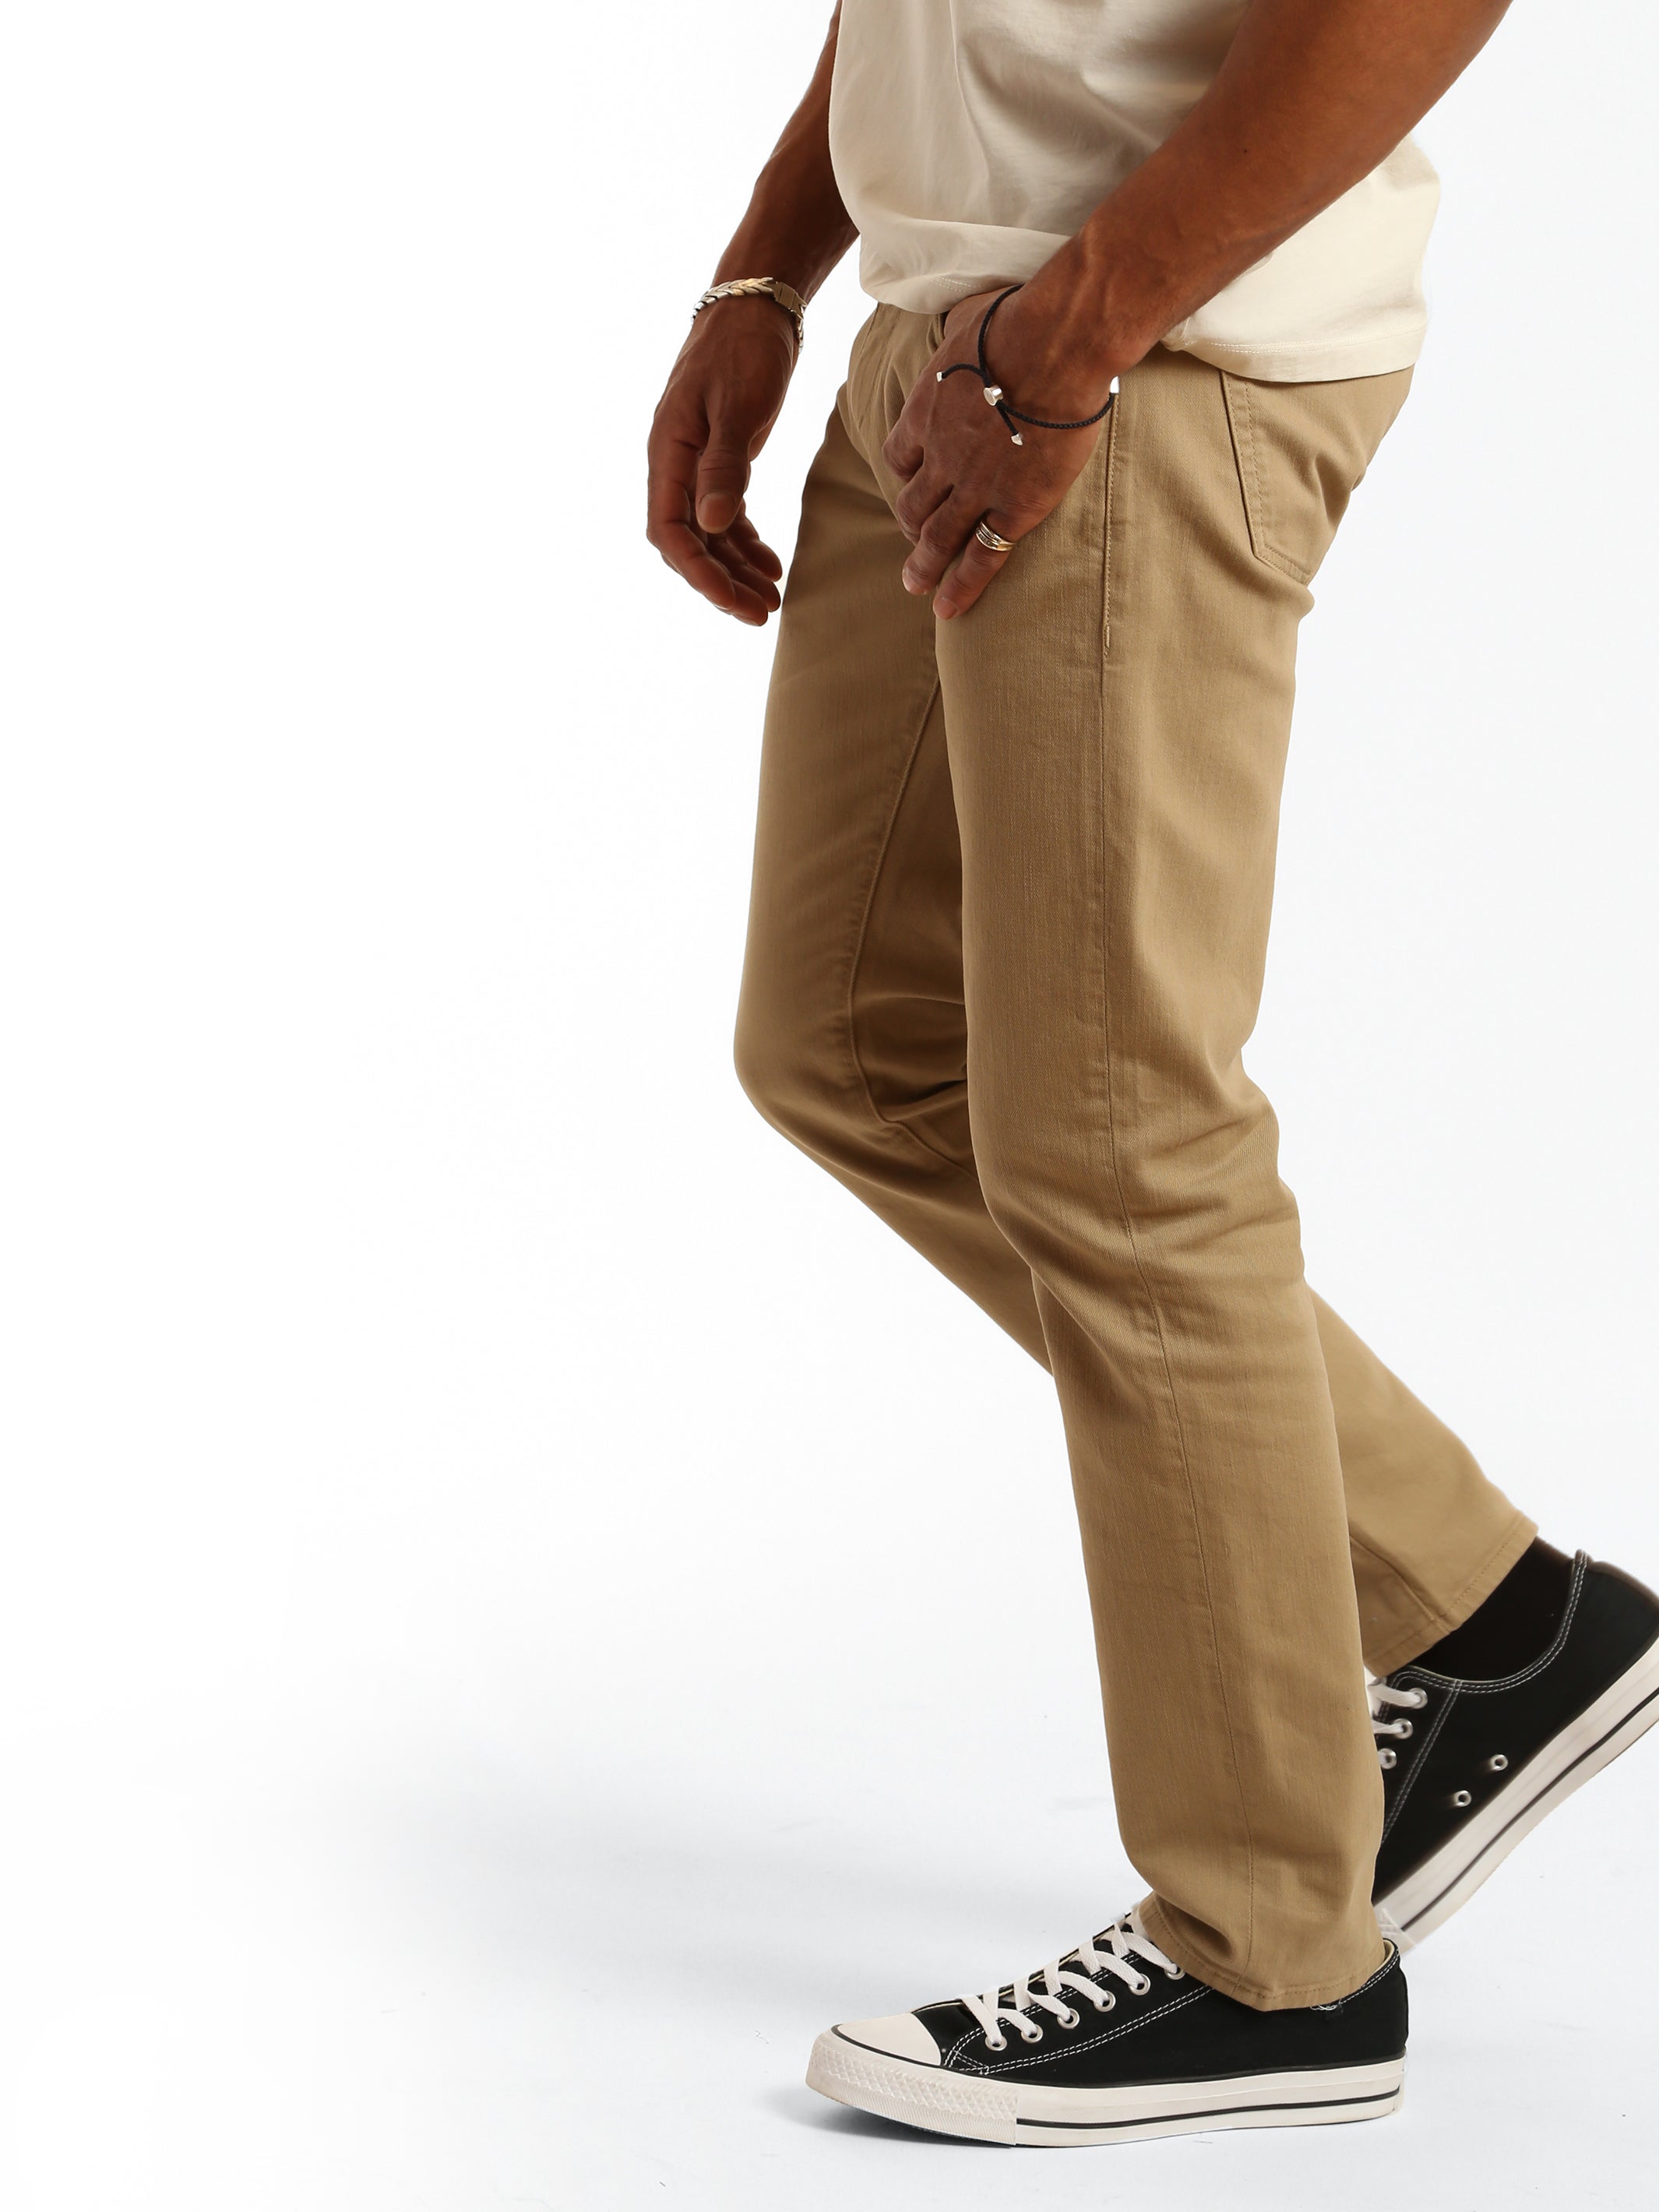 18 Khaki Pants Outfit Ideas to Upgrade Your Wardrobe